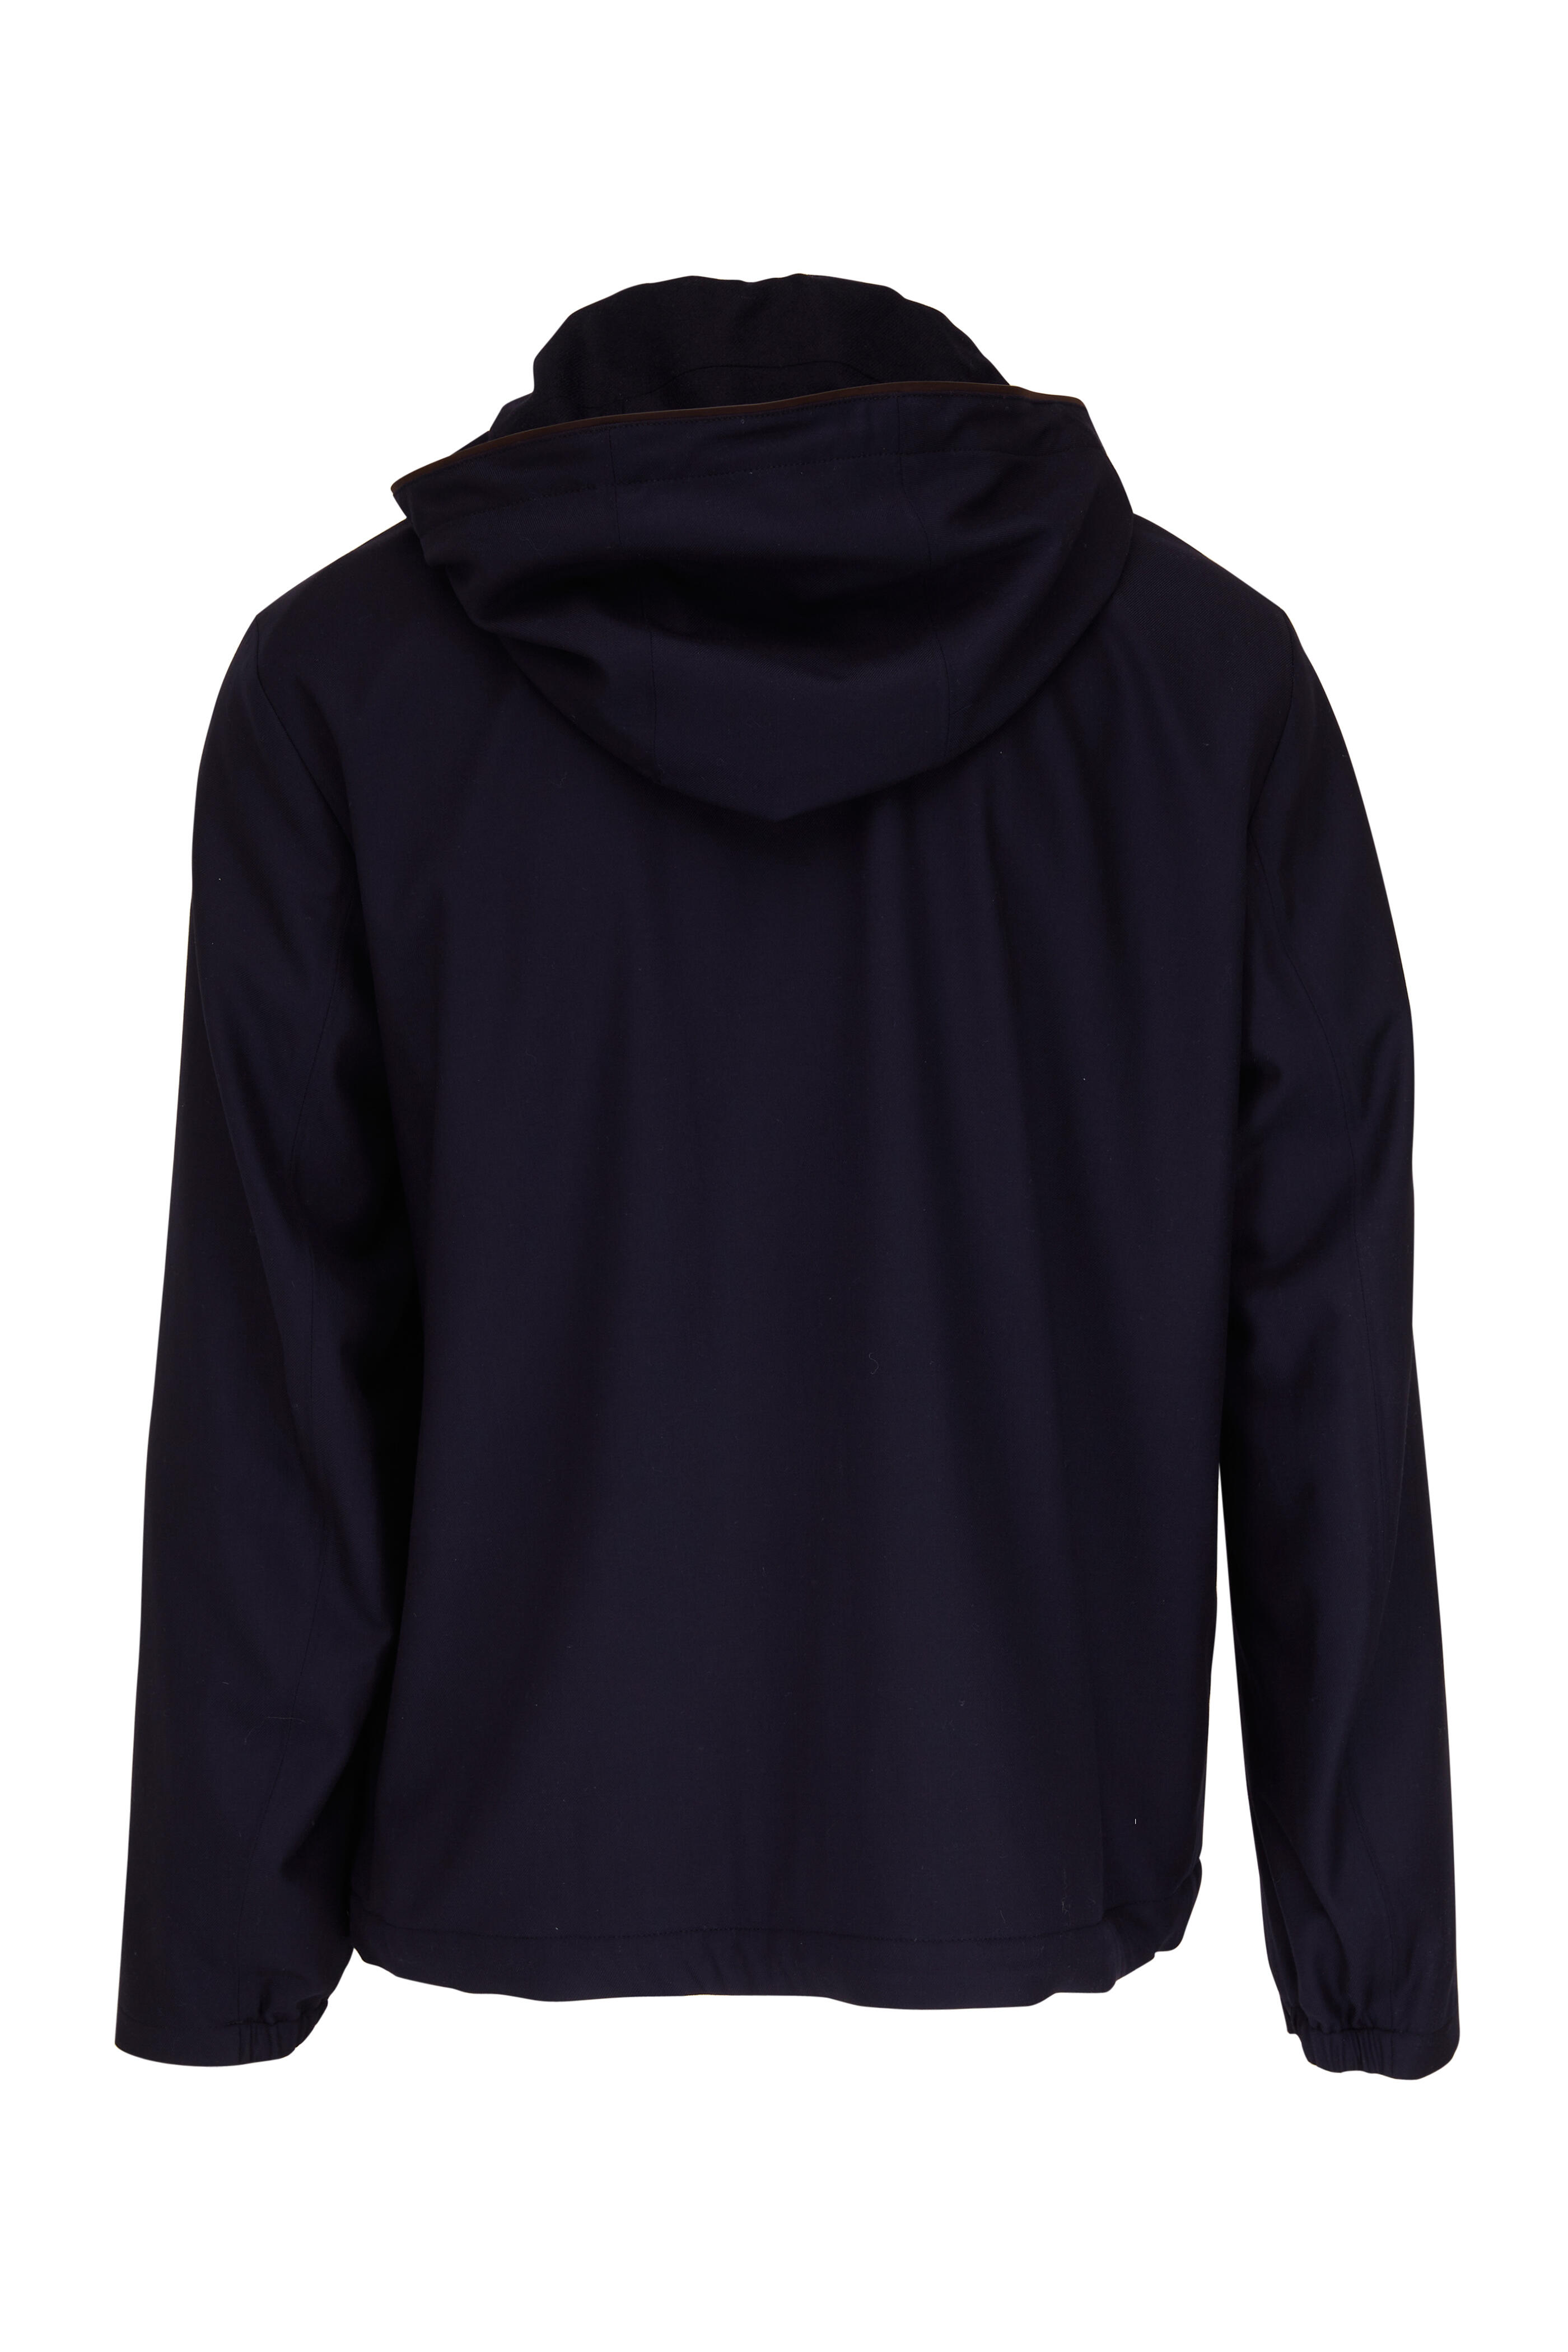 Zegna - Navy Hooded Jacket | Mitchell Stores